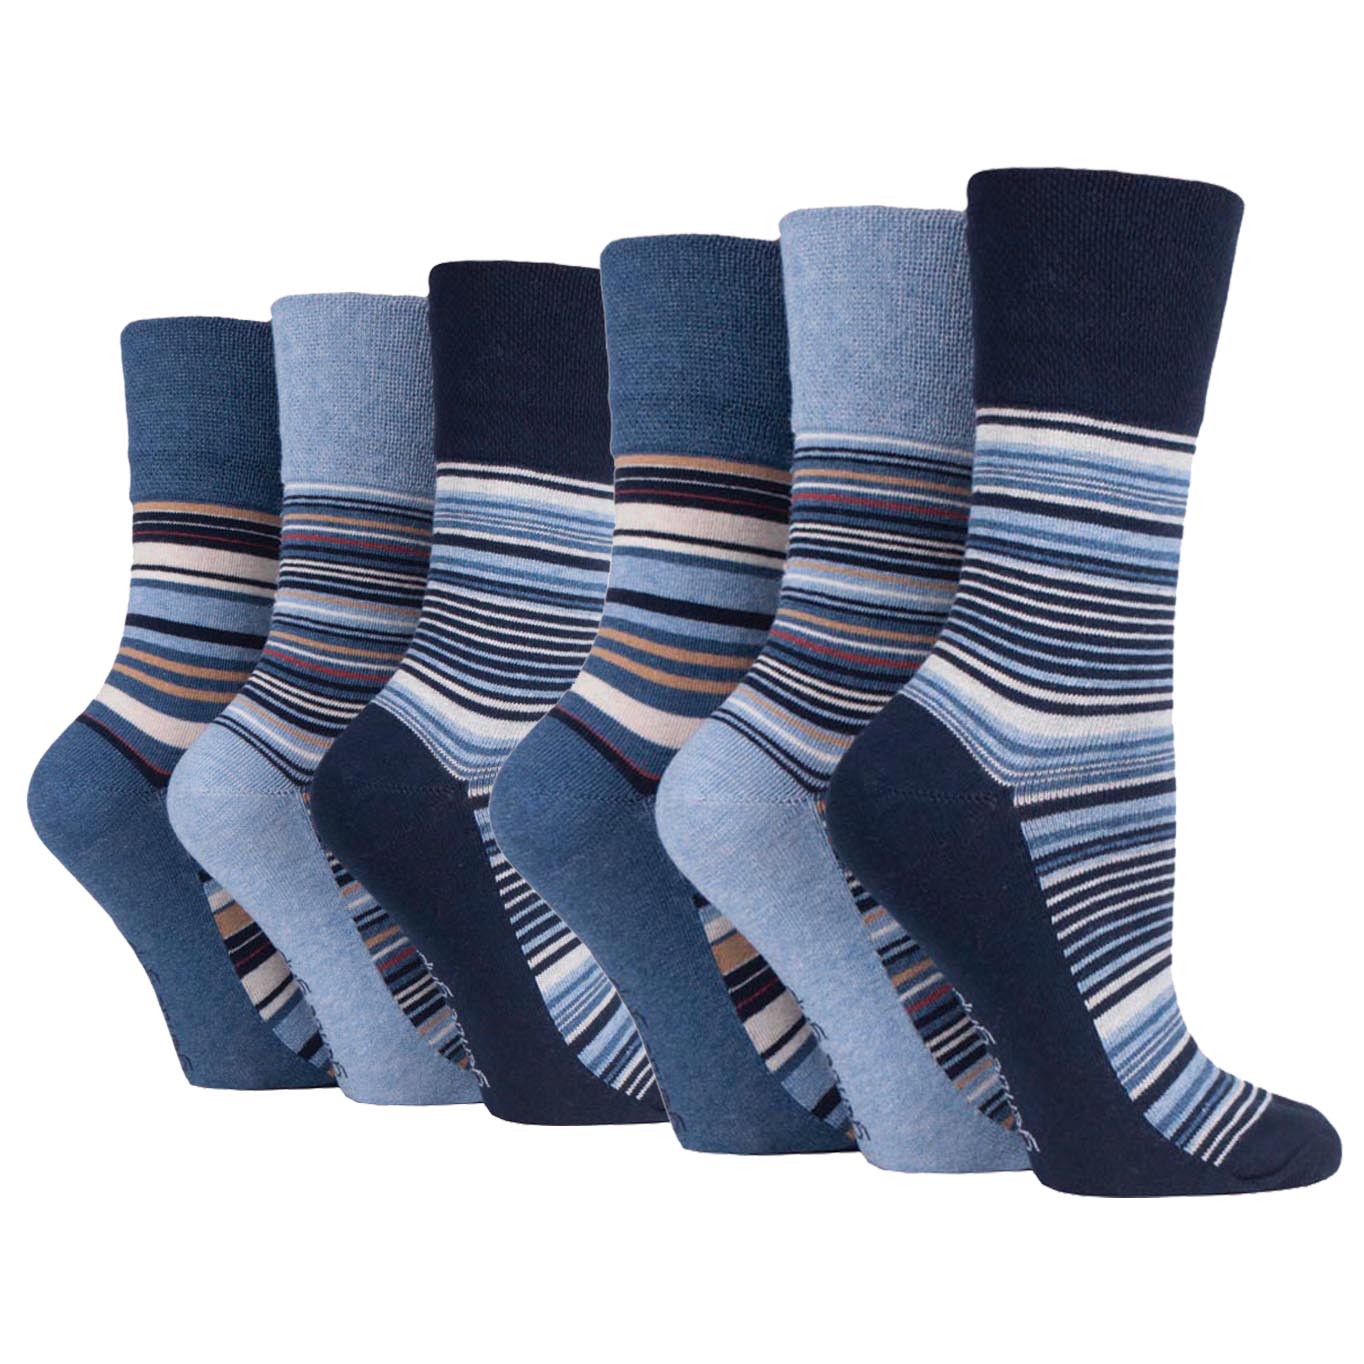 6 Pairs Ladies Gentle Grip Cotton Socks - Intellect Navy/Denim